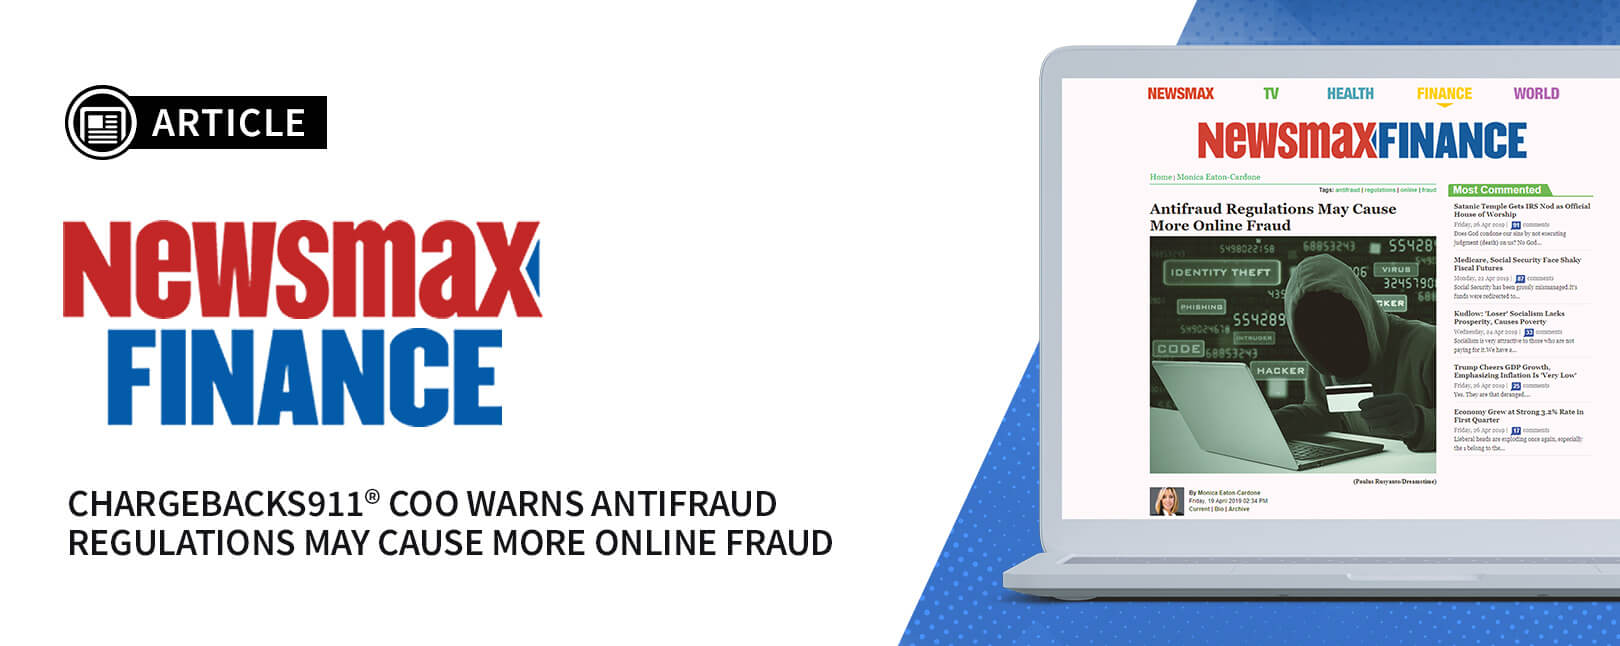 Antifraud Regulations May Cause More Online Fraud